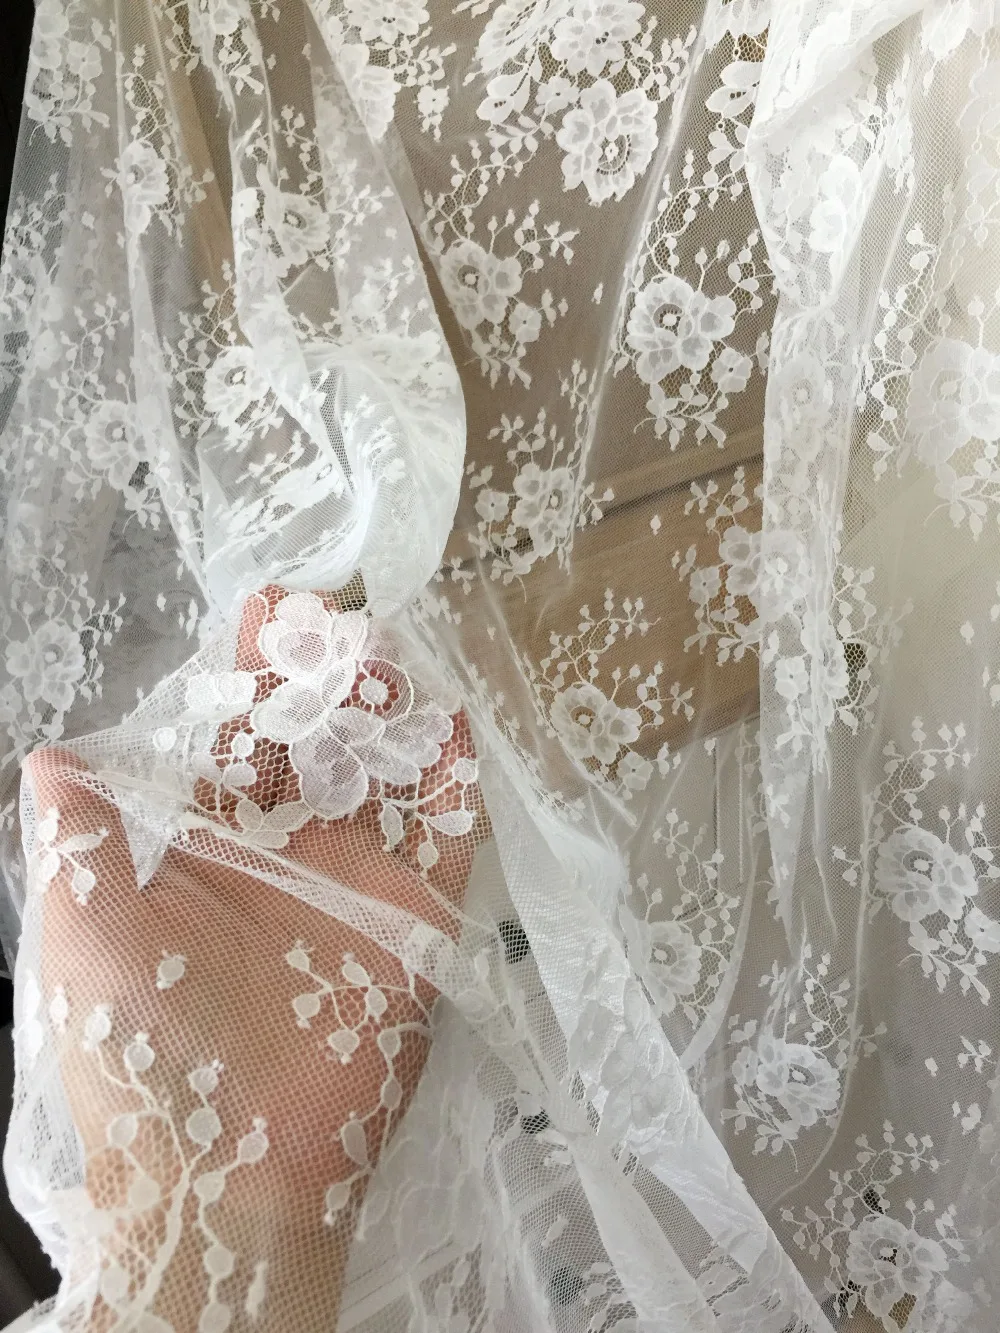 

3 Yards High Quality Chantilly Eyelash Bridal Lace Fabric in Off White for Veils,Wedding Gown Acessories , Bridal Bolero